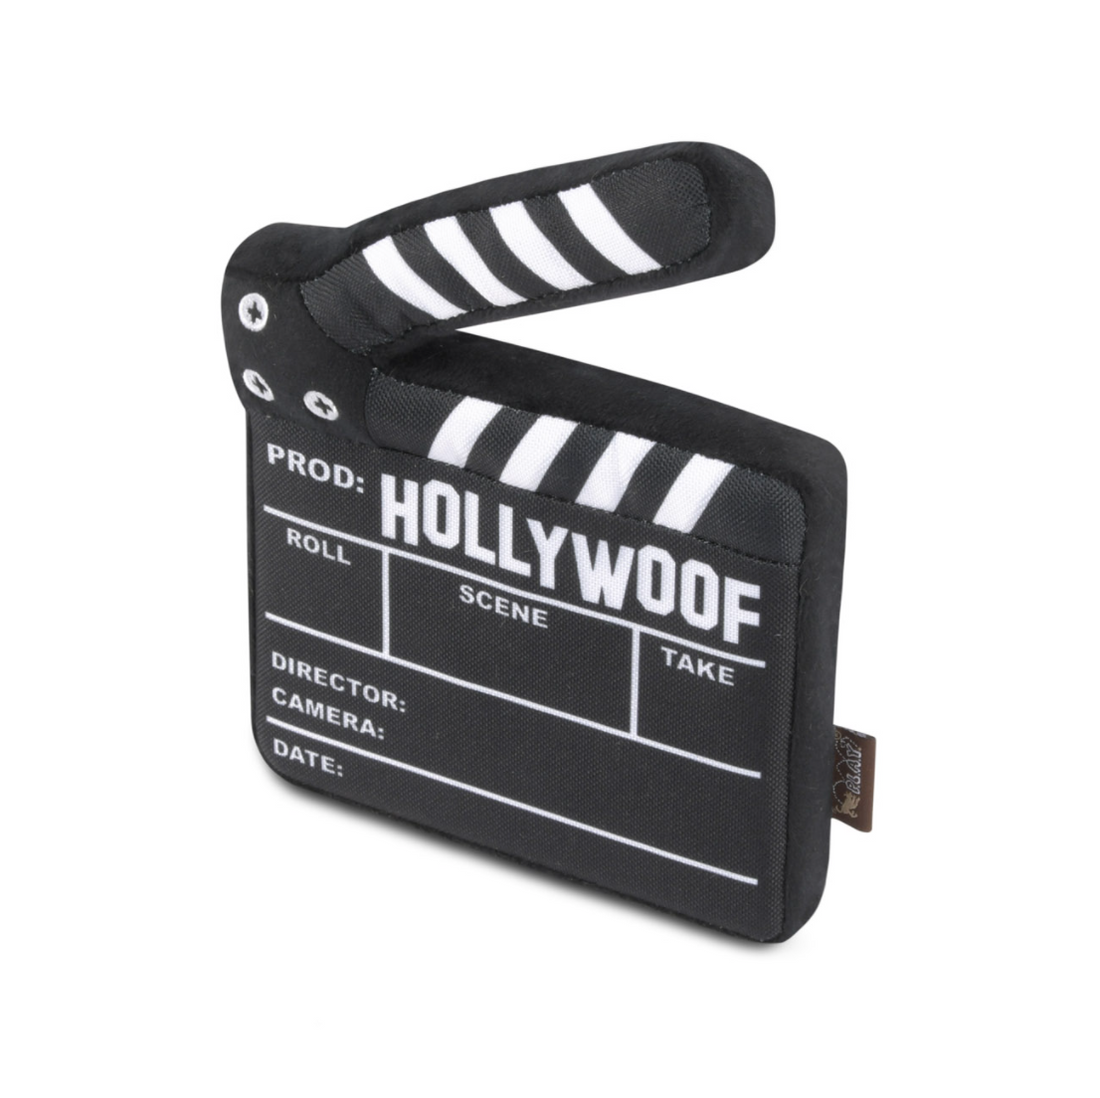 Hollywoof Cinema Director Board